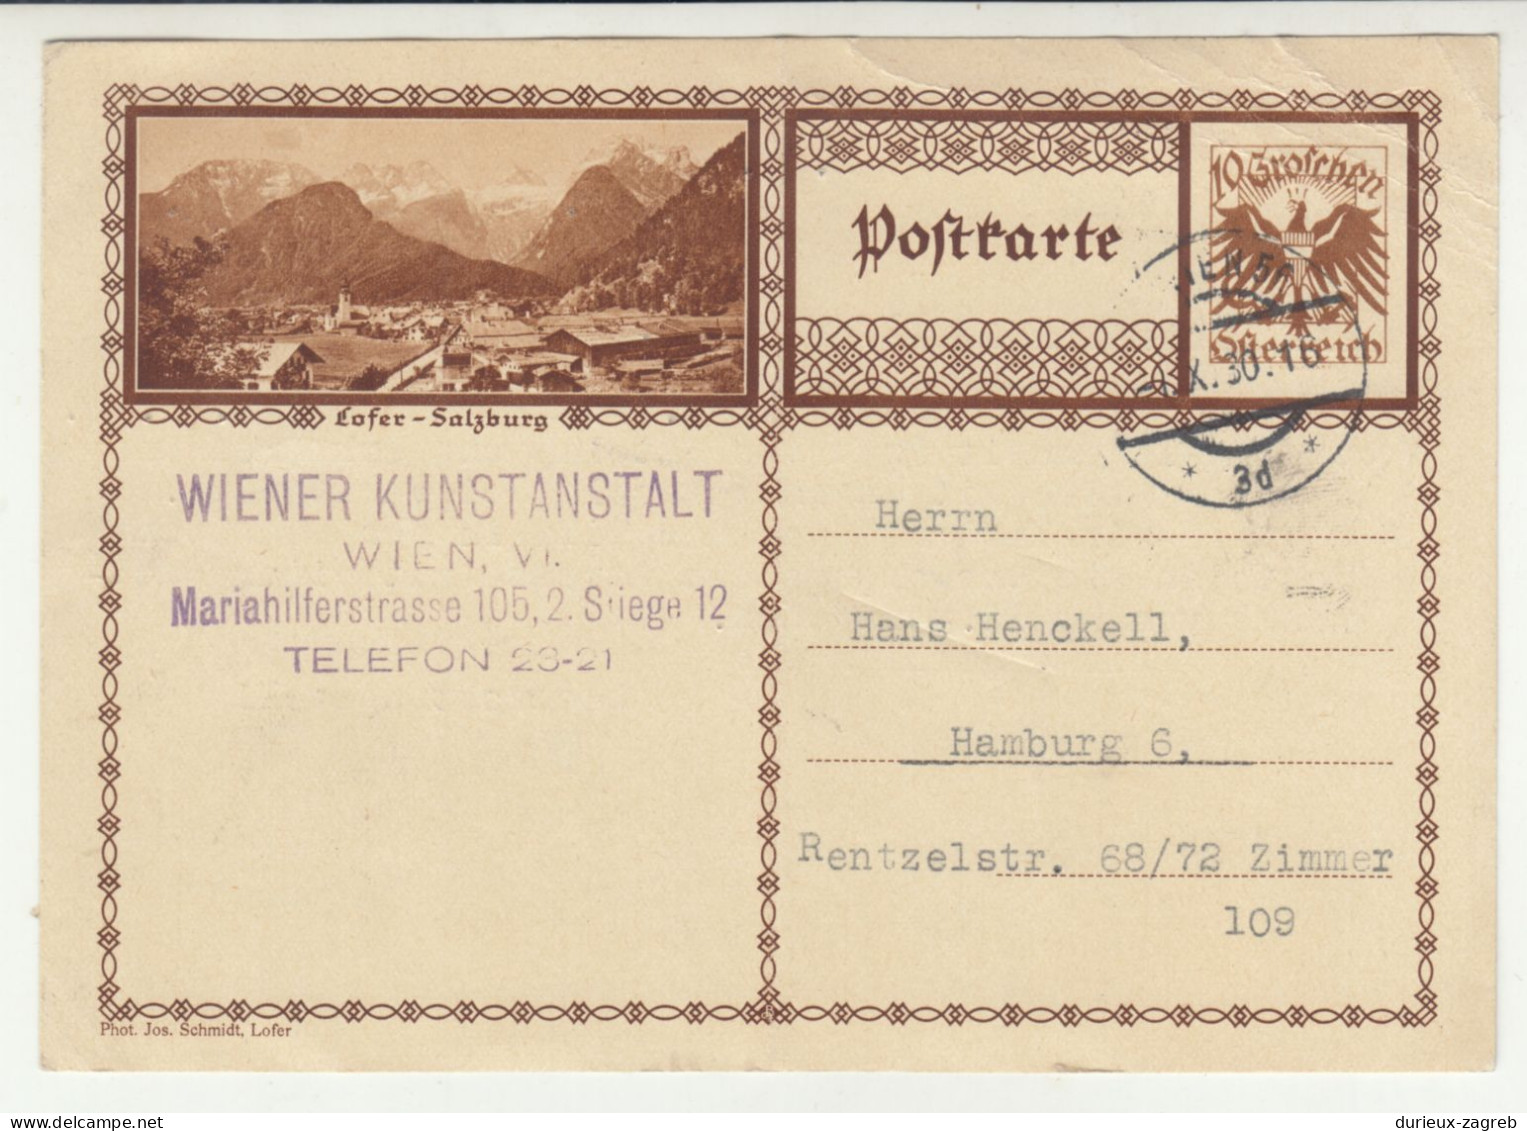 Lofer-Salzburg Illustrated Postal Stationery Postcard Posted 1930 B240503 - Postcards